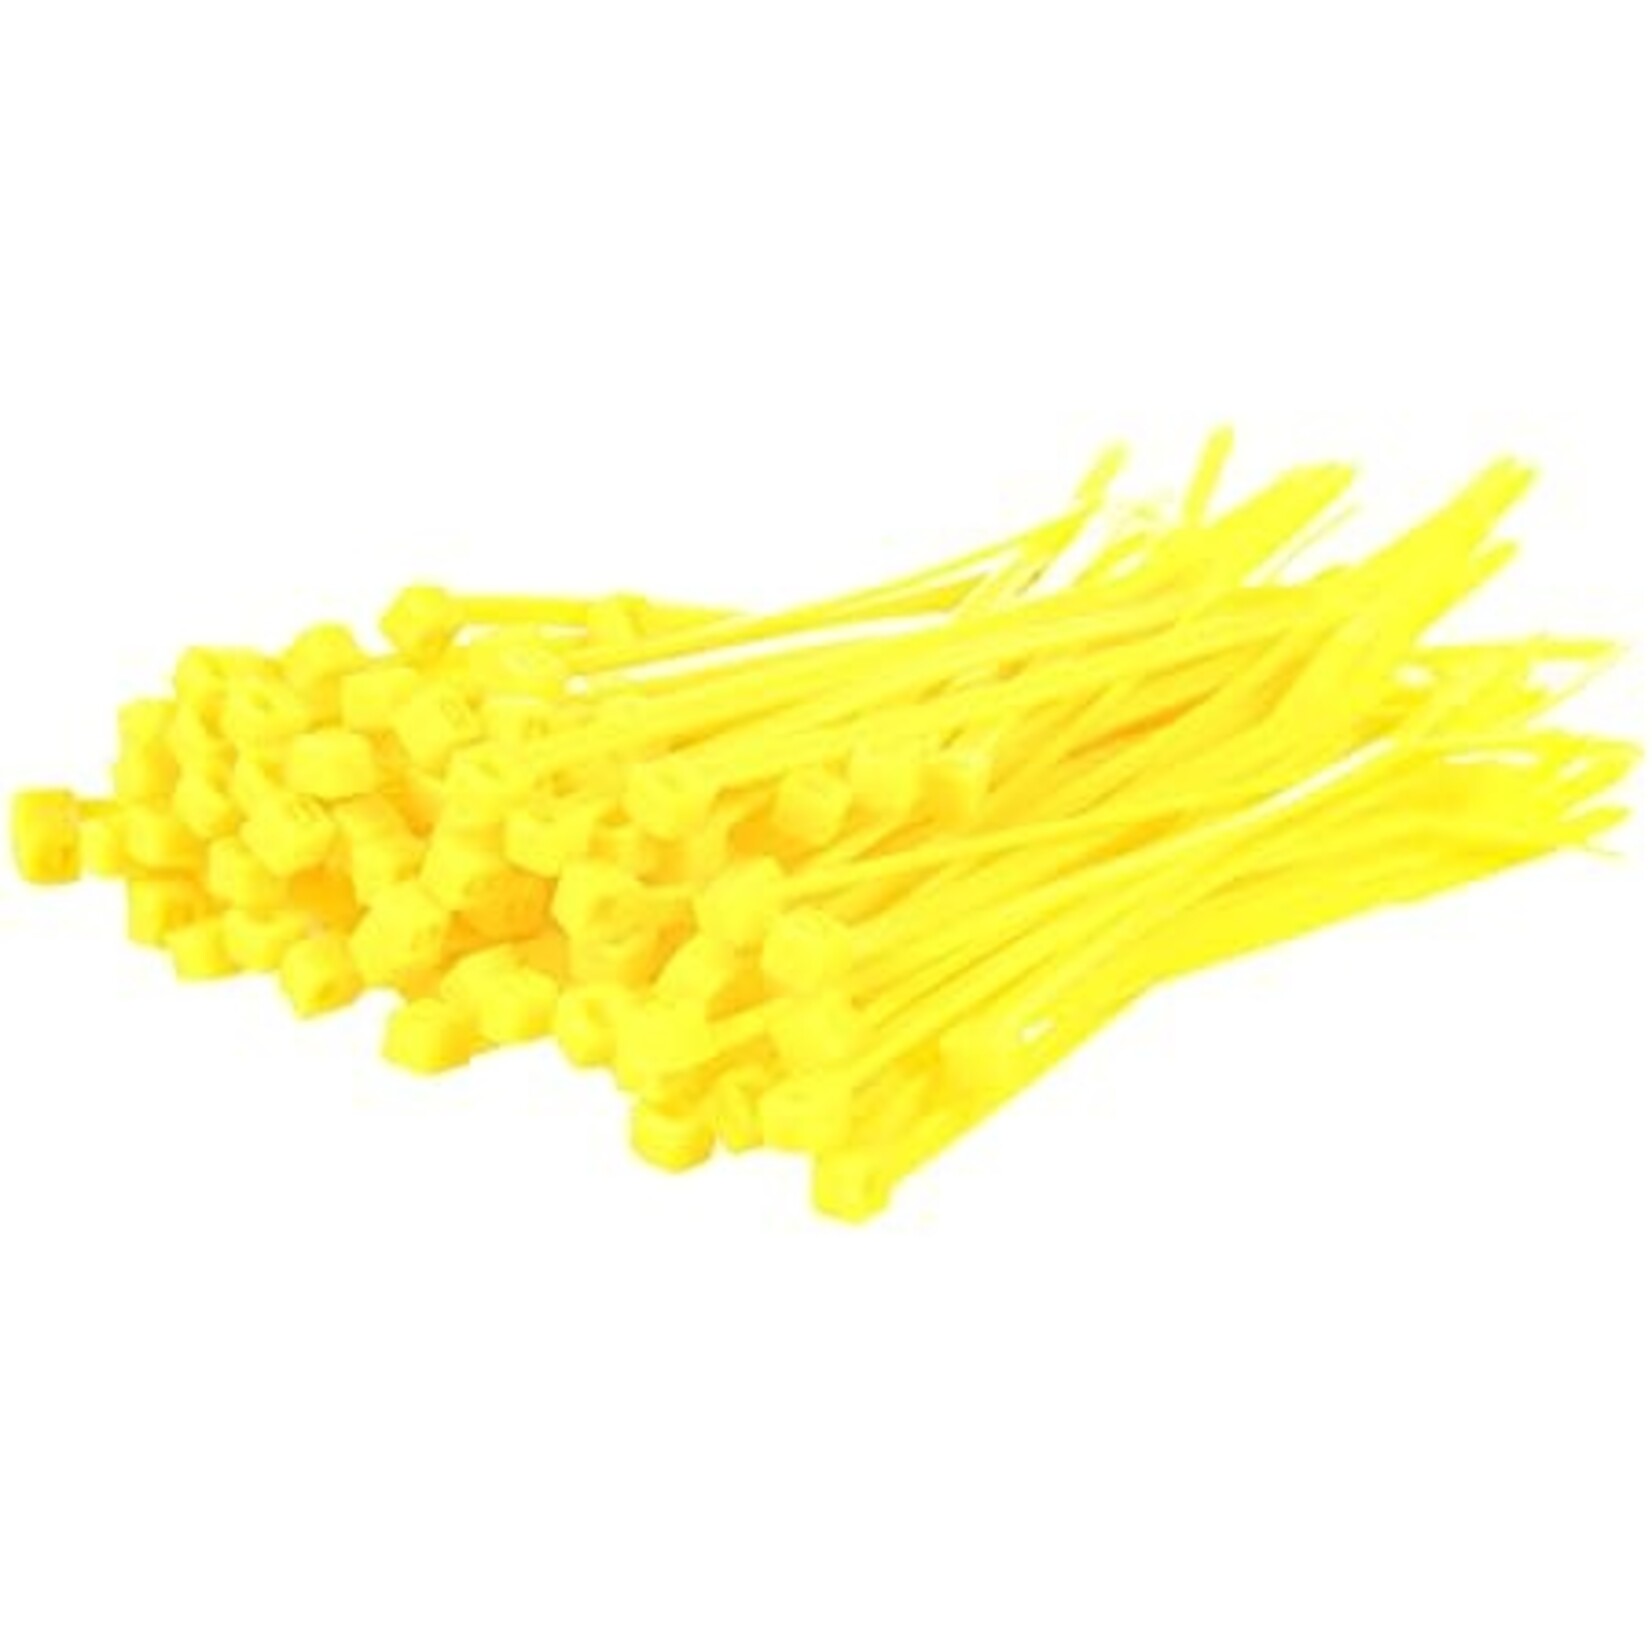 none Zip Ties 10" - Bright Yellow - 3 oz (approx 50 ties)